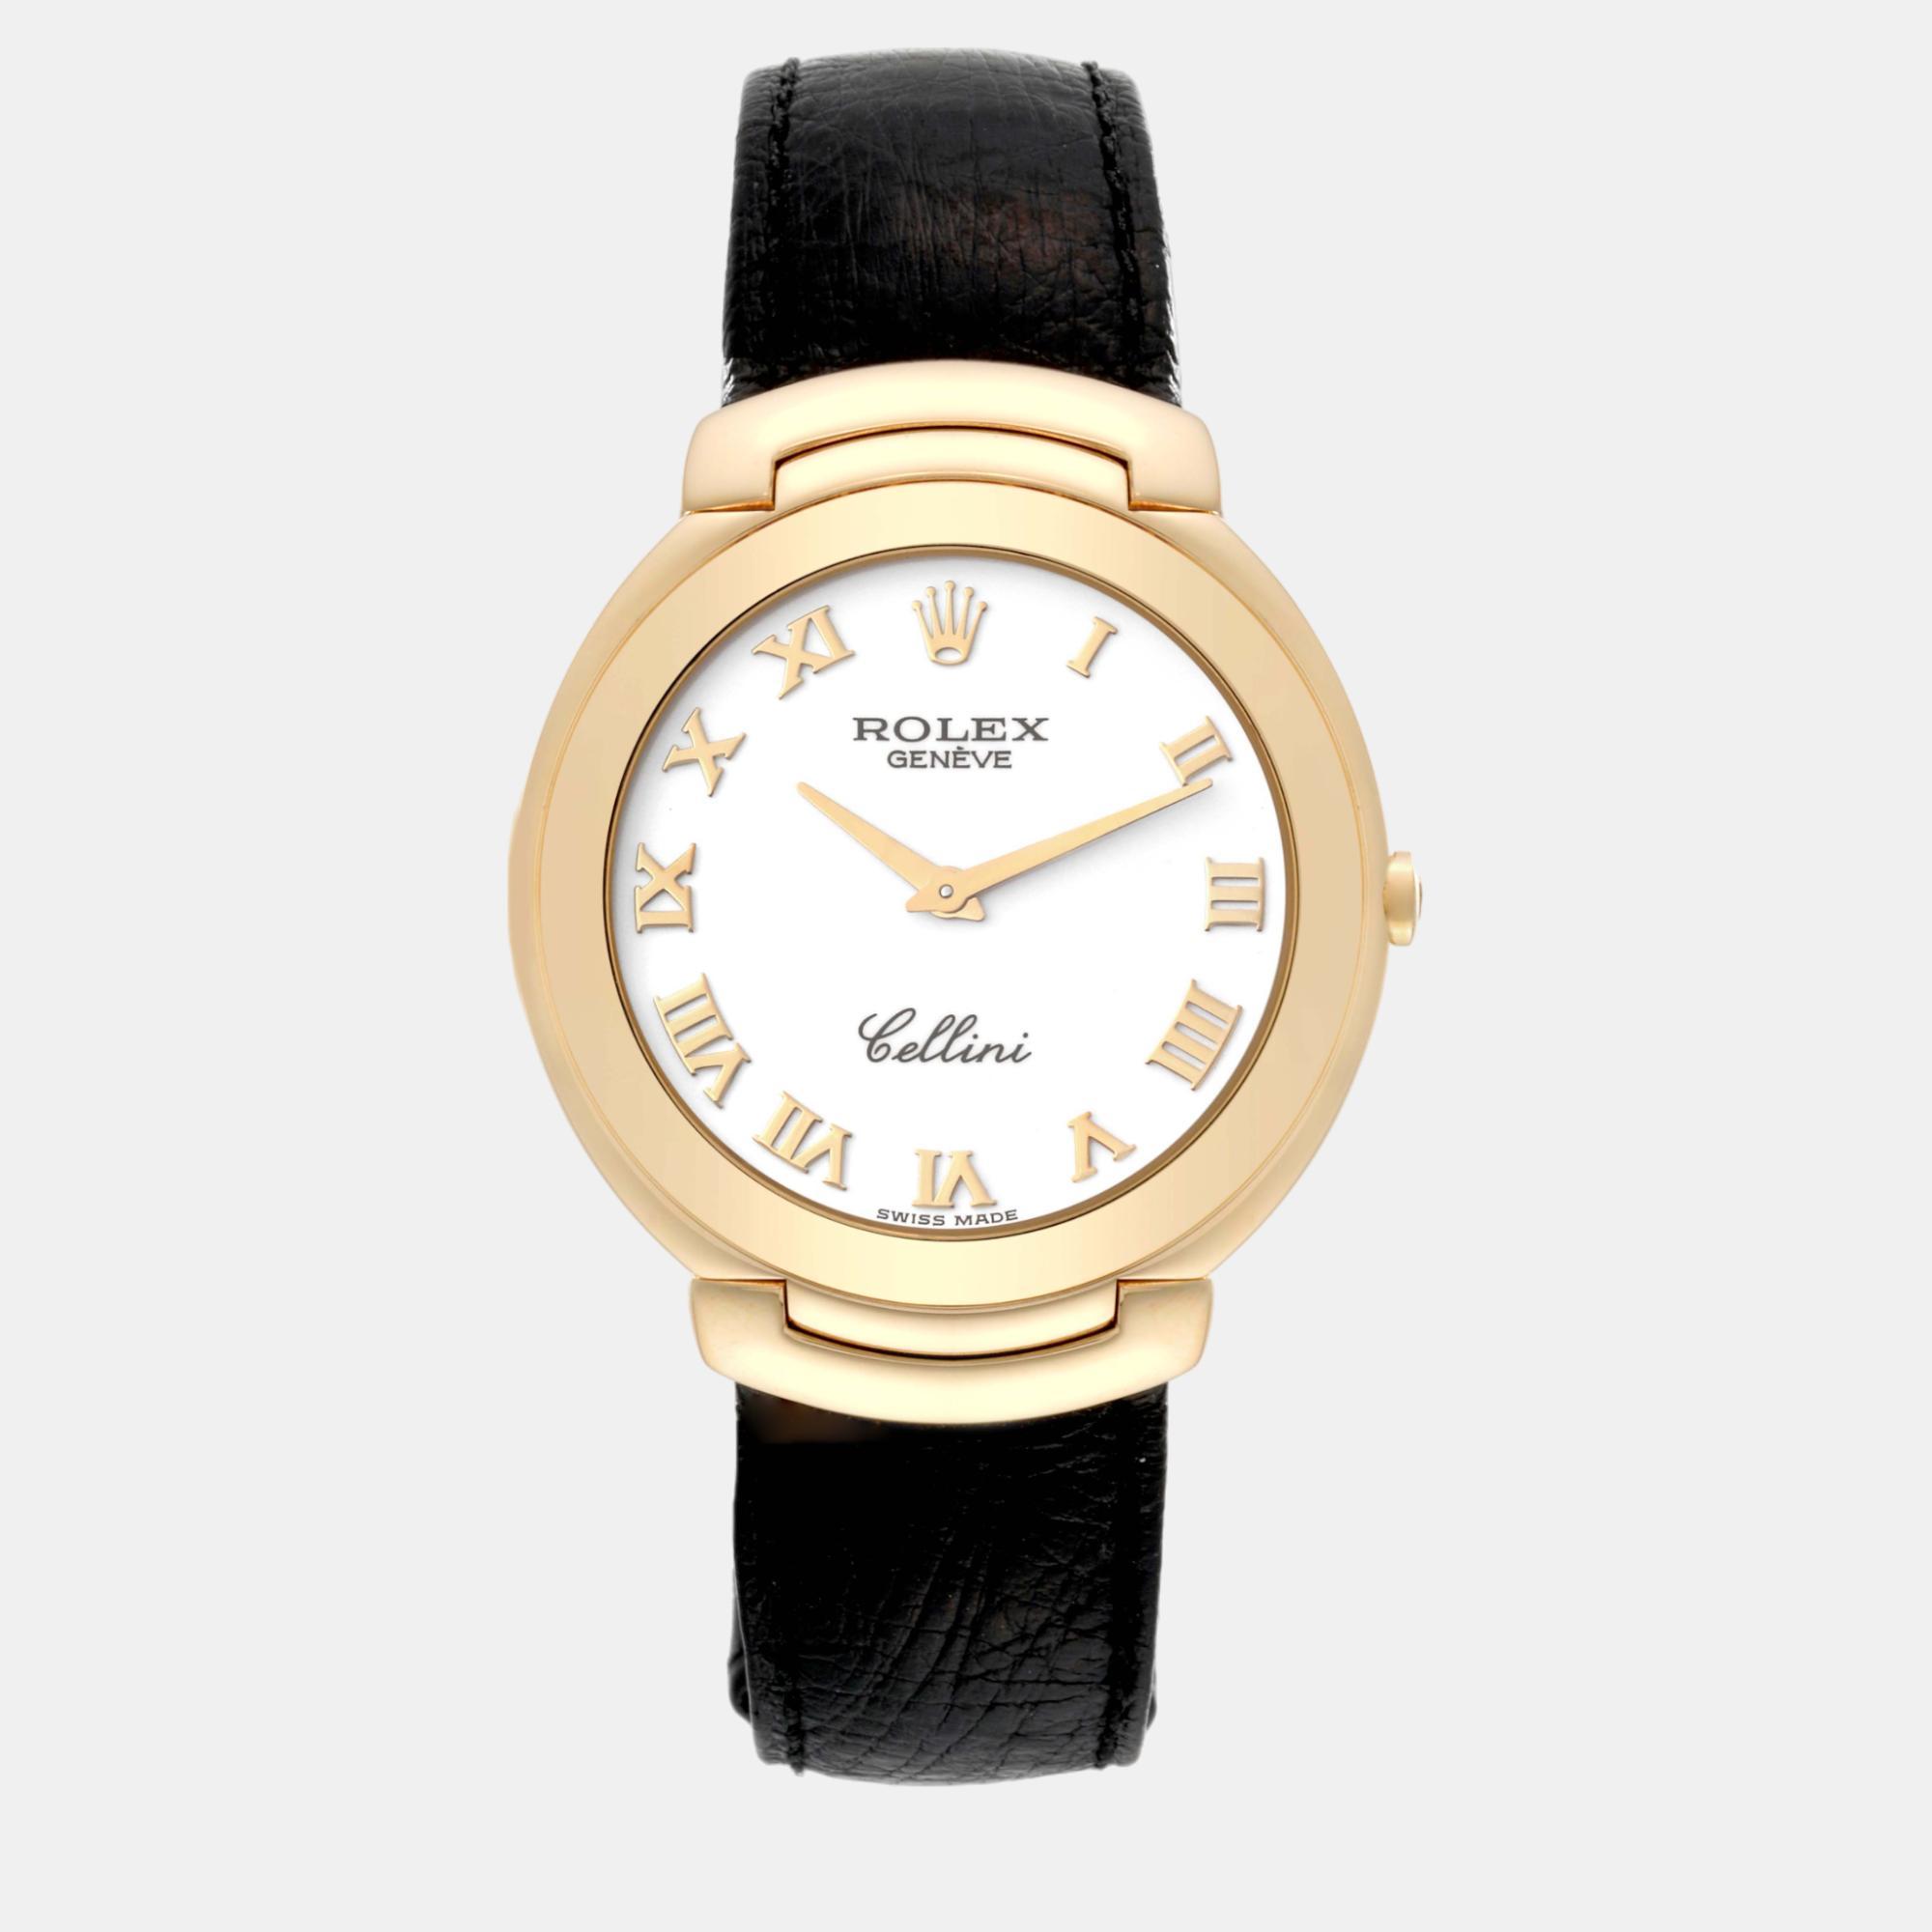 Rolex cellini 18k yellow gold white dial black strap men's watch 37.5 mm